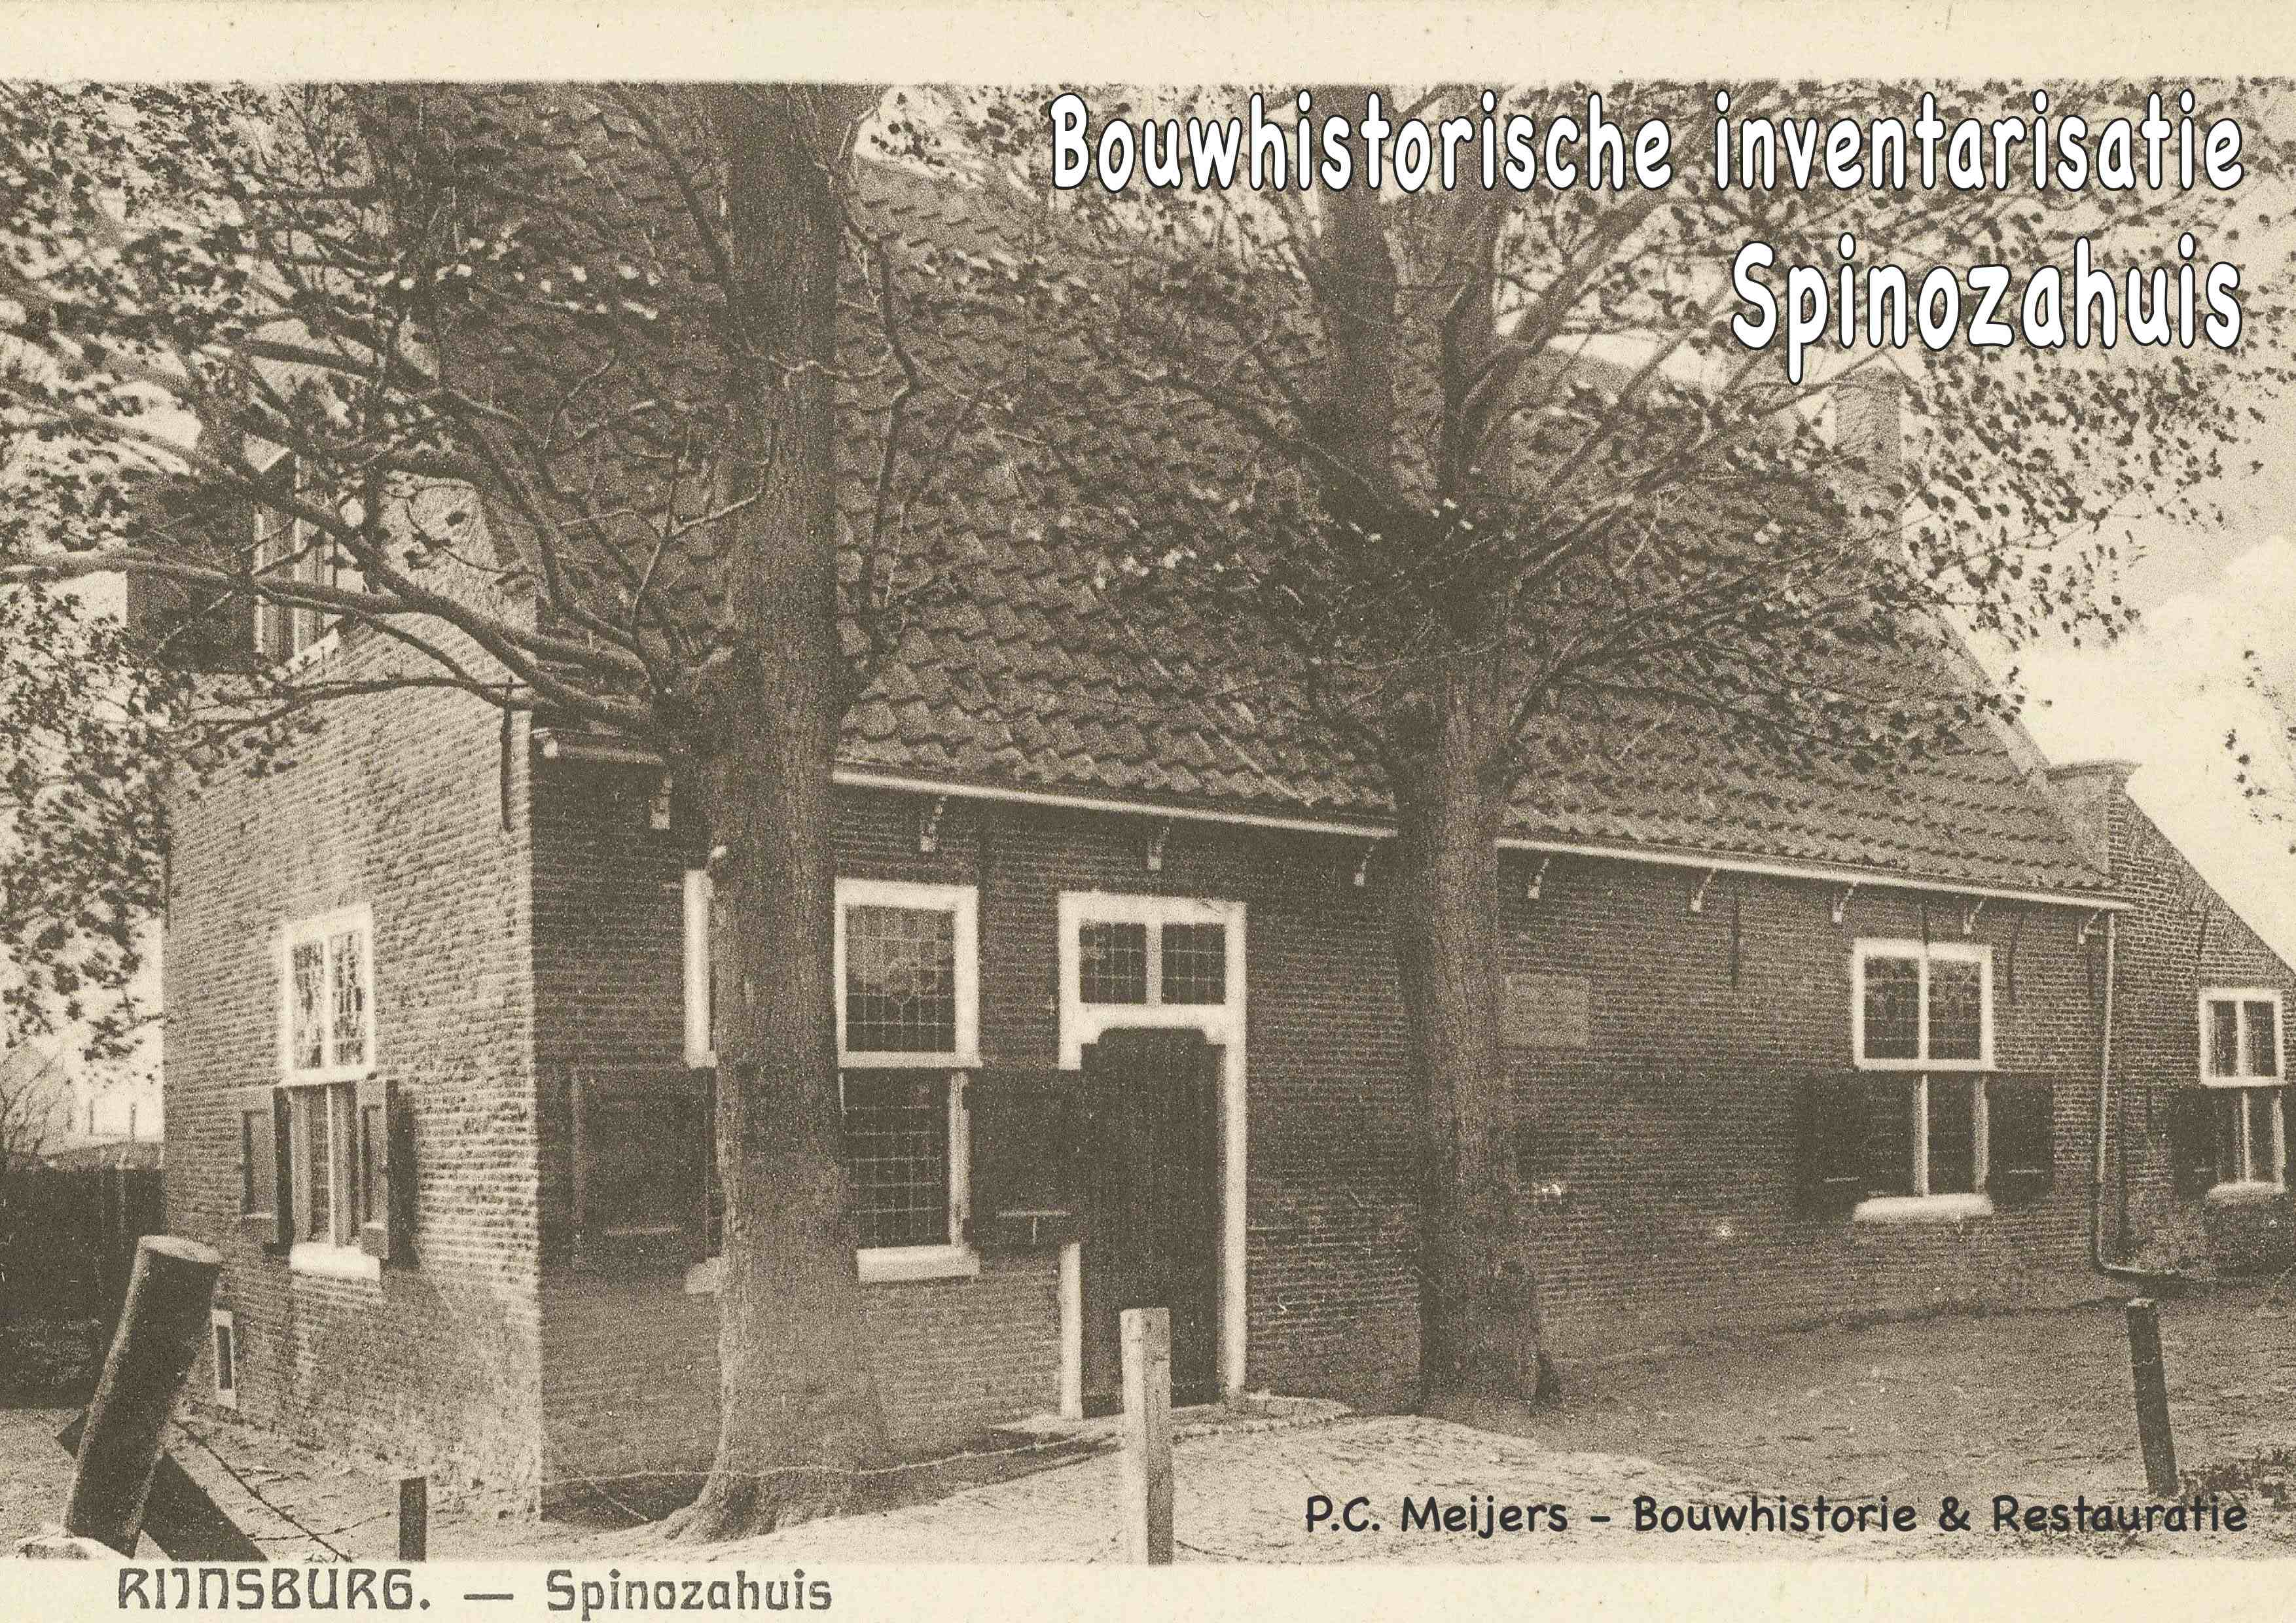 Spinozahuis, Rijnsburg